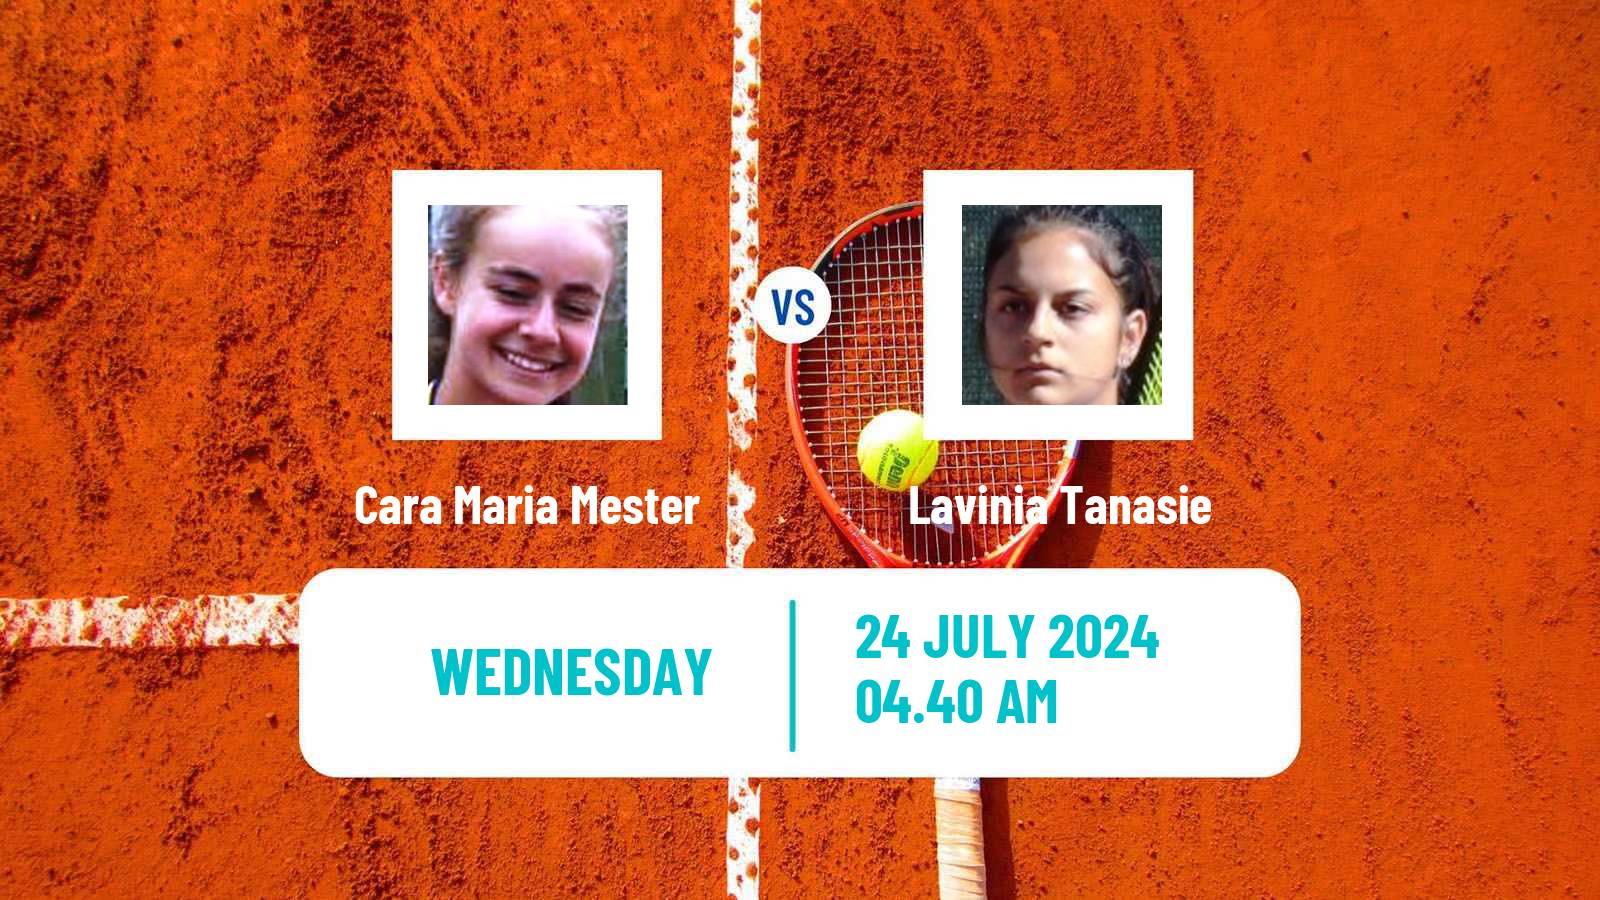 Tennis ITF W15 Satu Mare Women Cara Maria Mester - Lavinia Tanasie